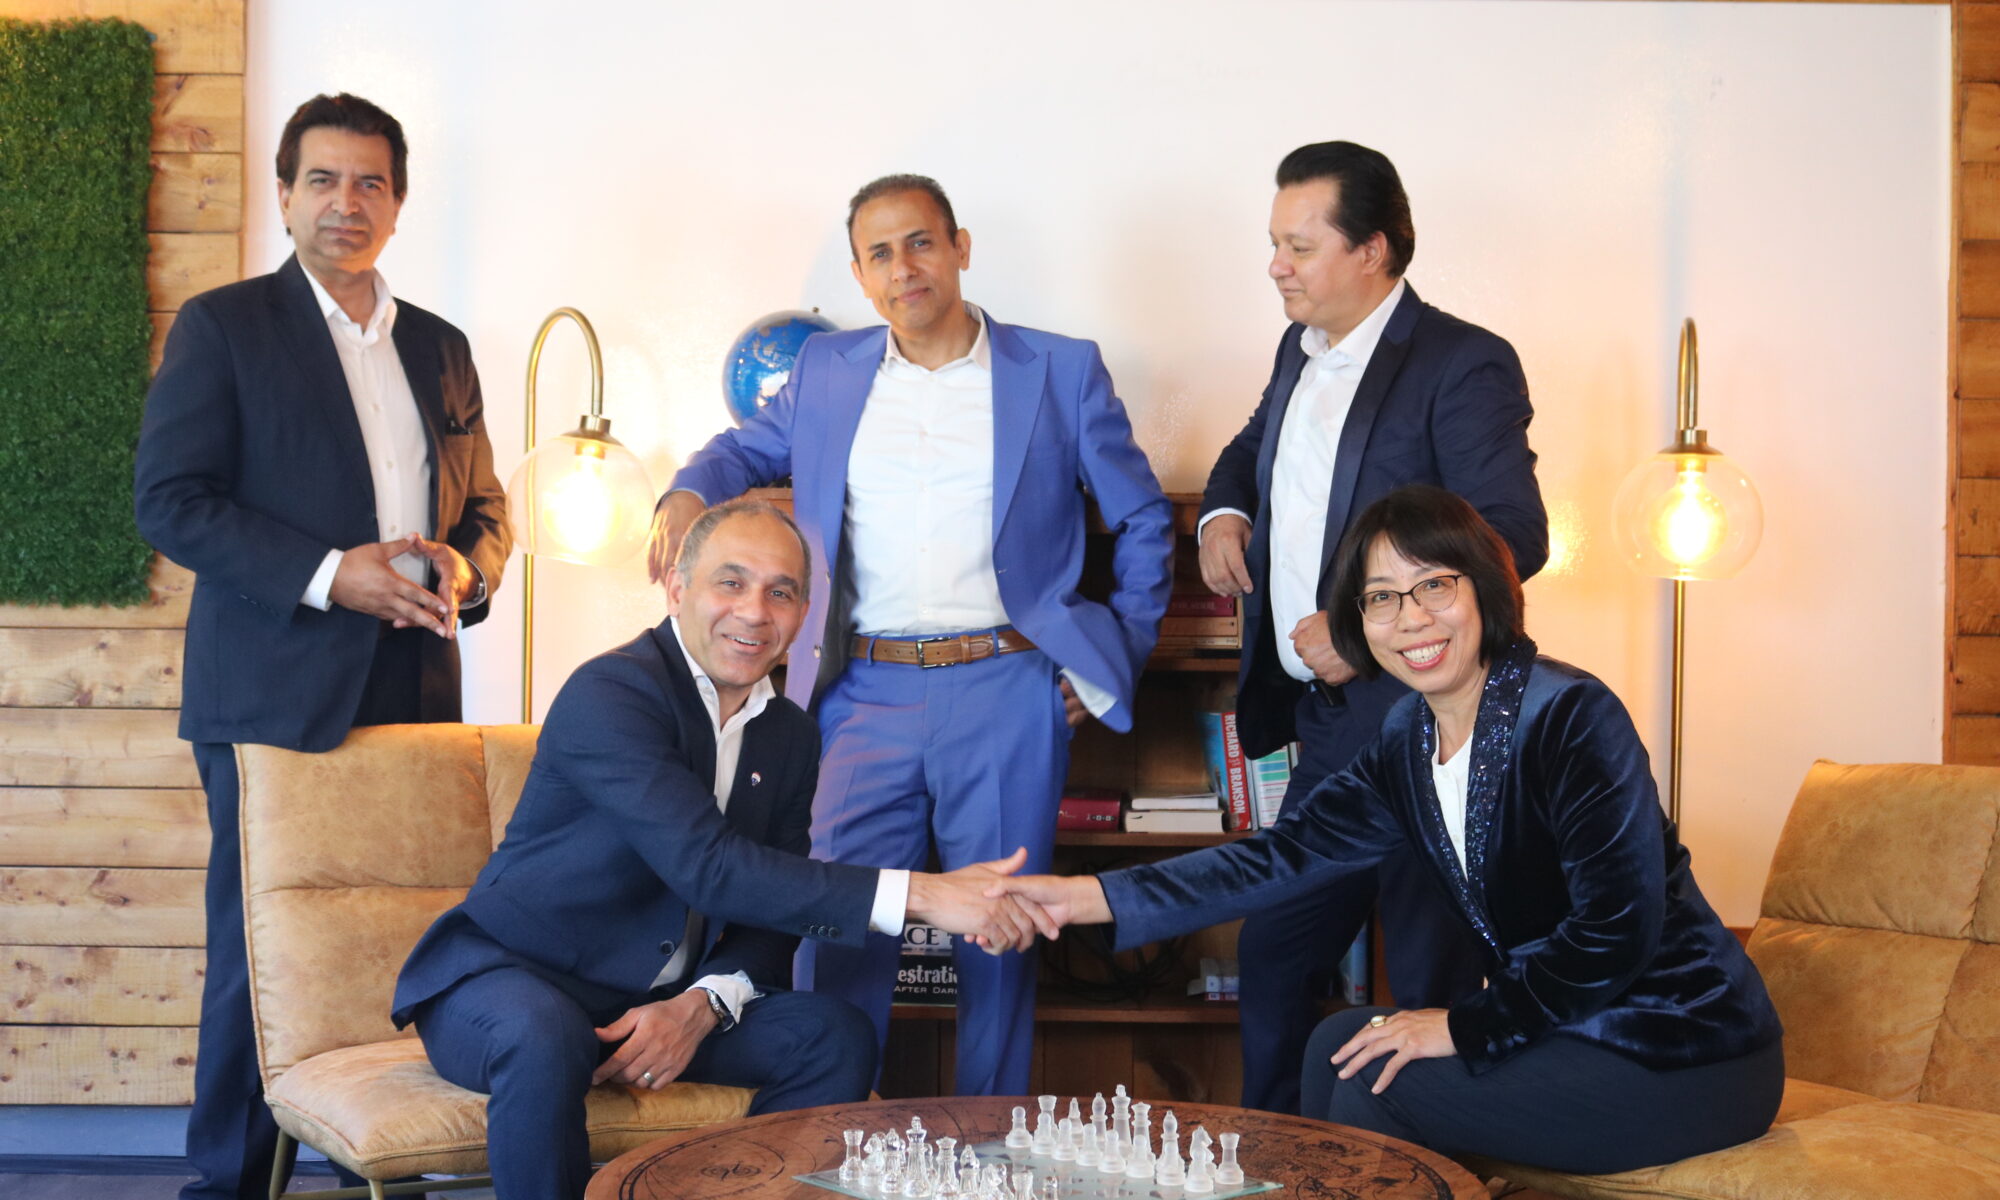 mississauga real estate brokerage - the success team sitting together